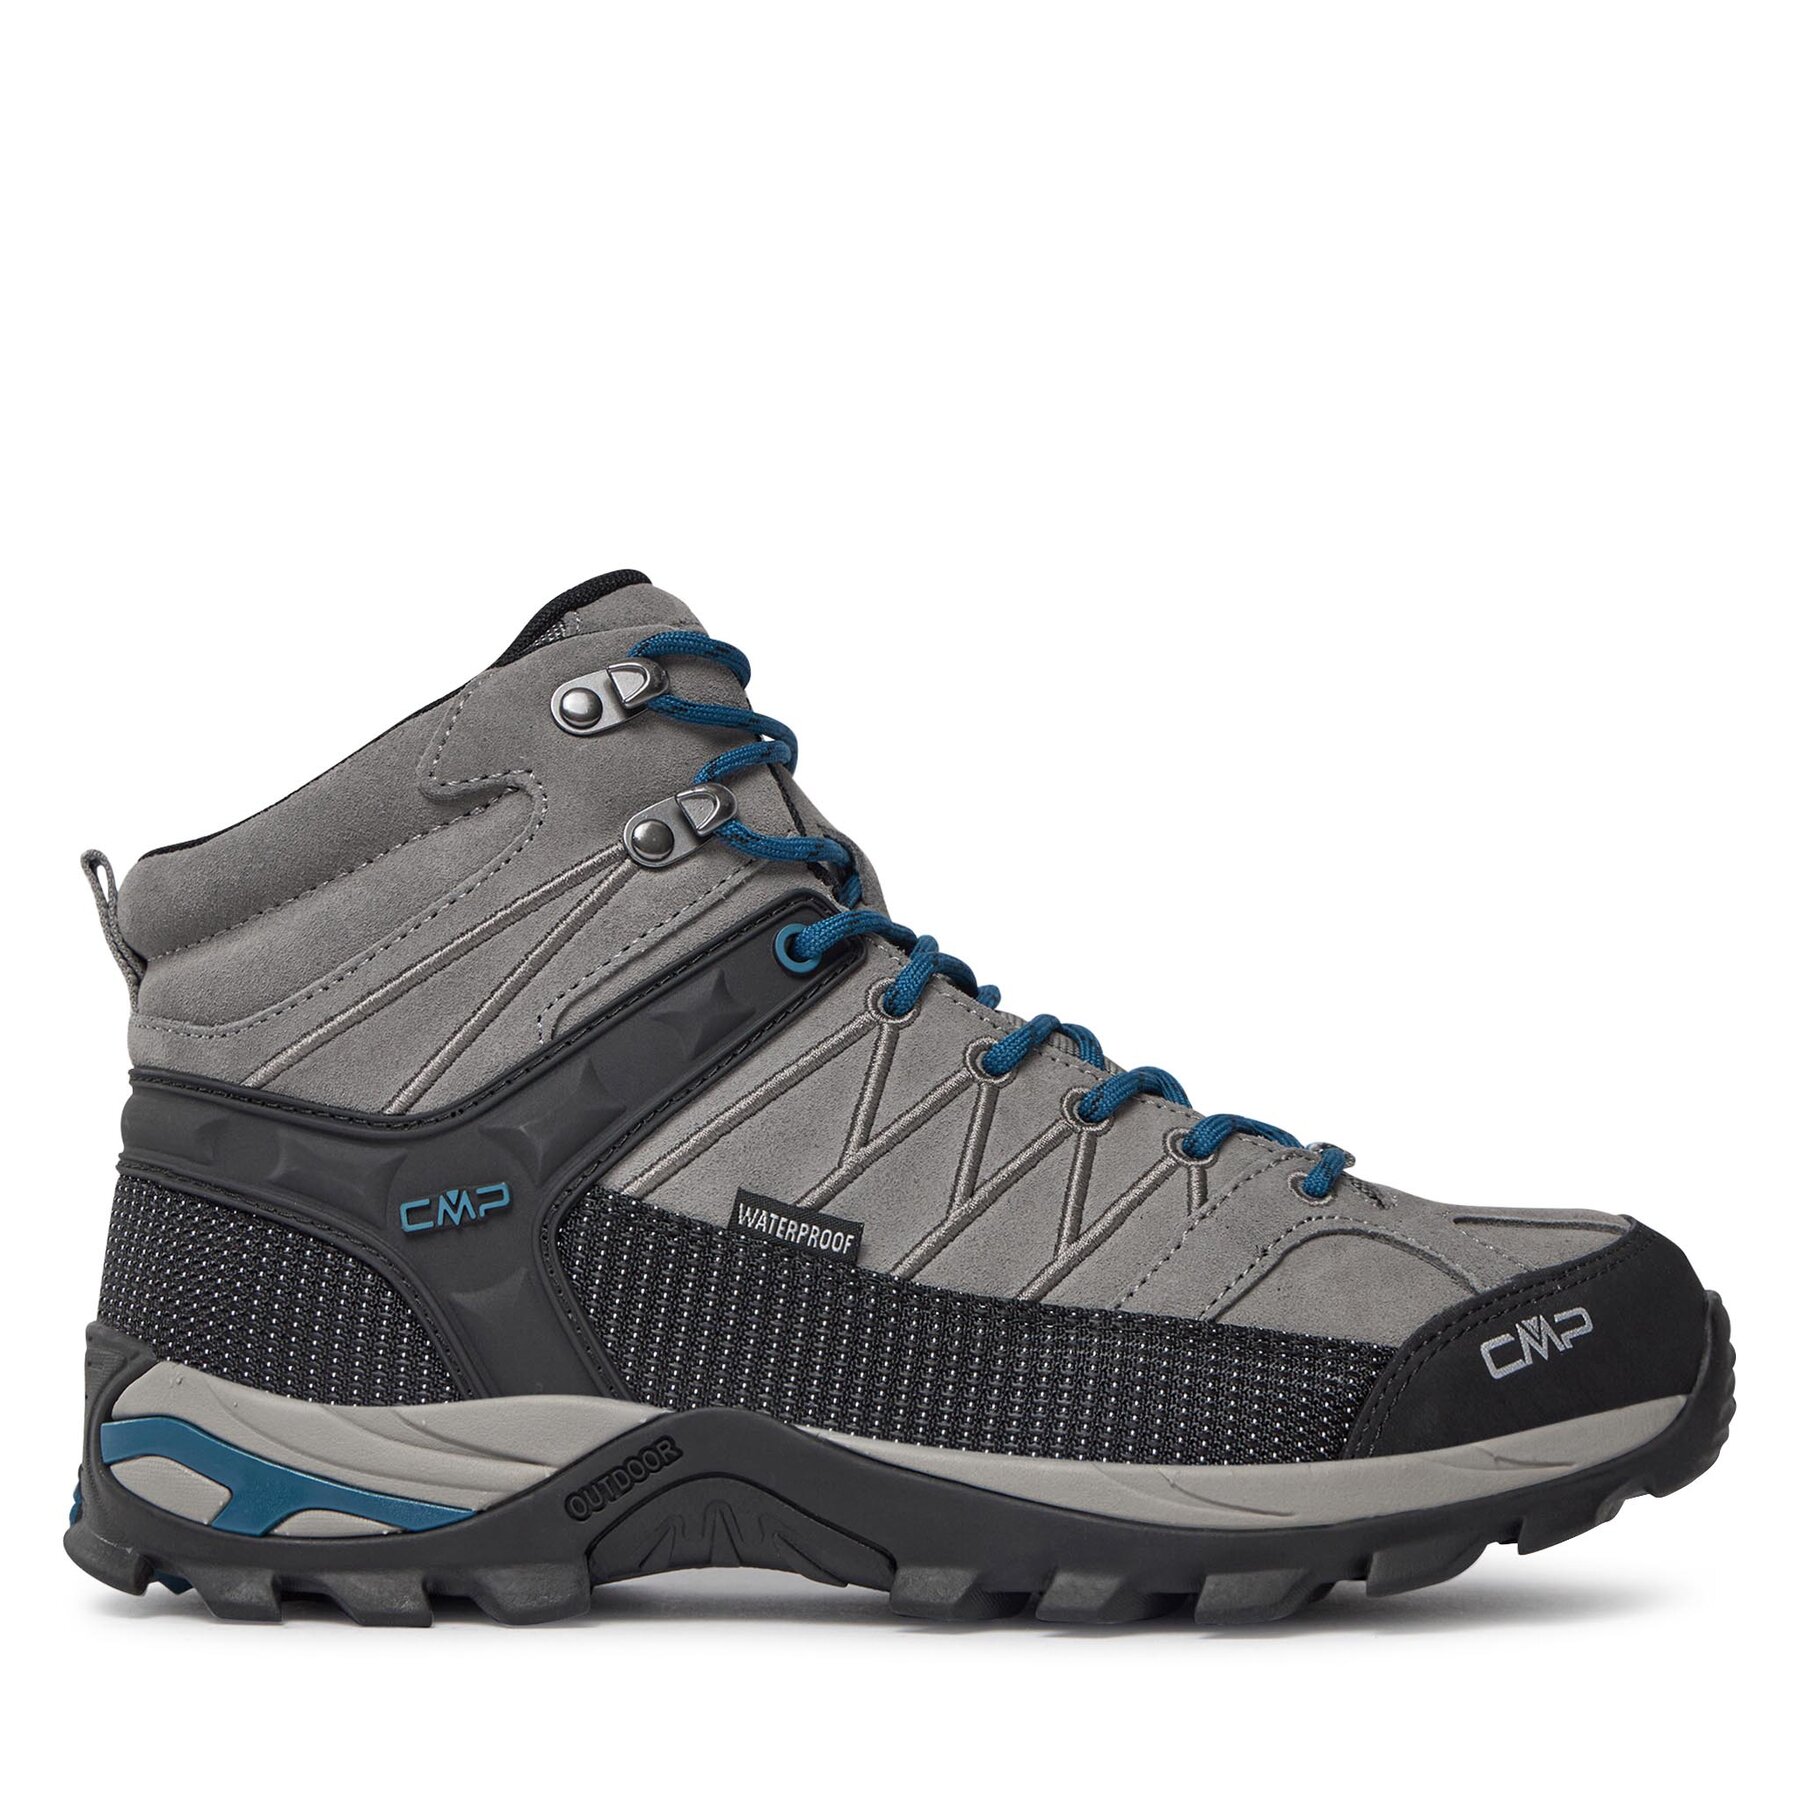 Trekkingschuhe CMP Rigel Mid Trekking Shoes Wp 3Q12947 Mandorla P535 von CMP